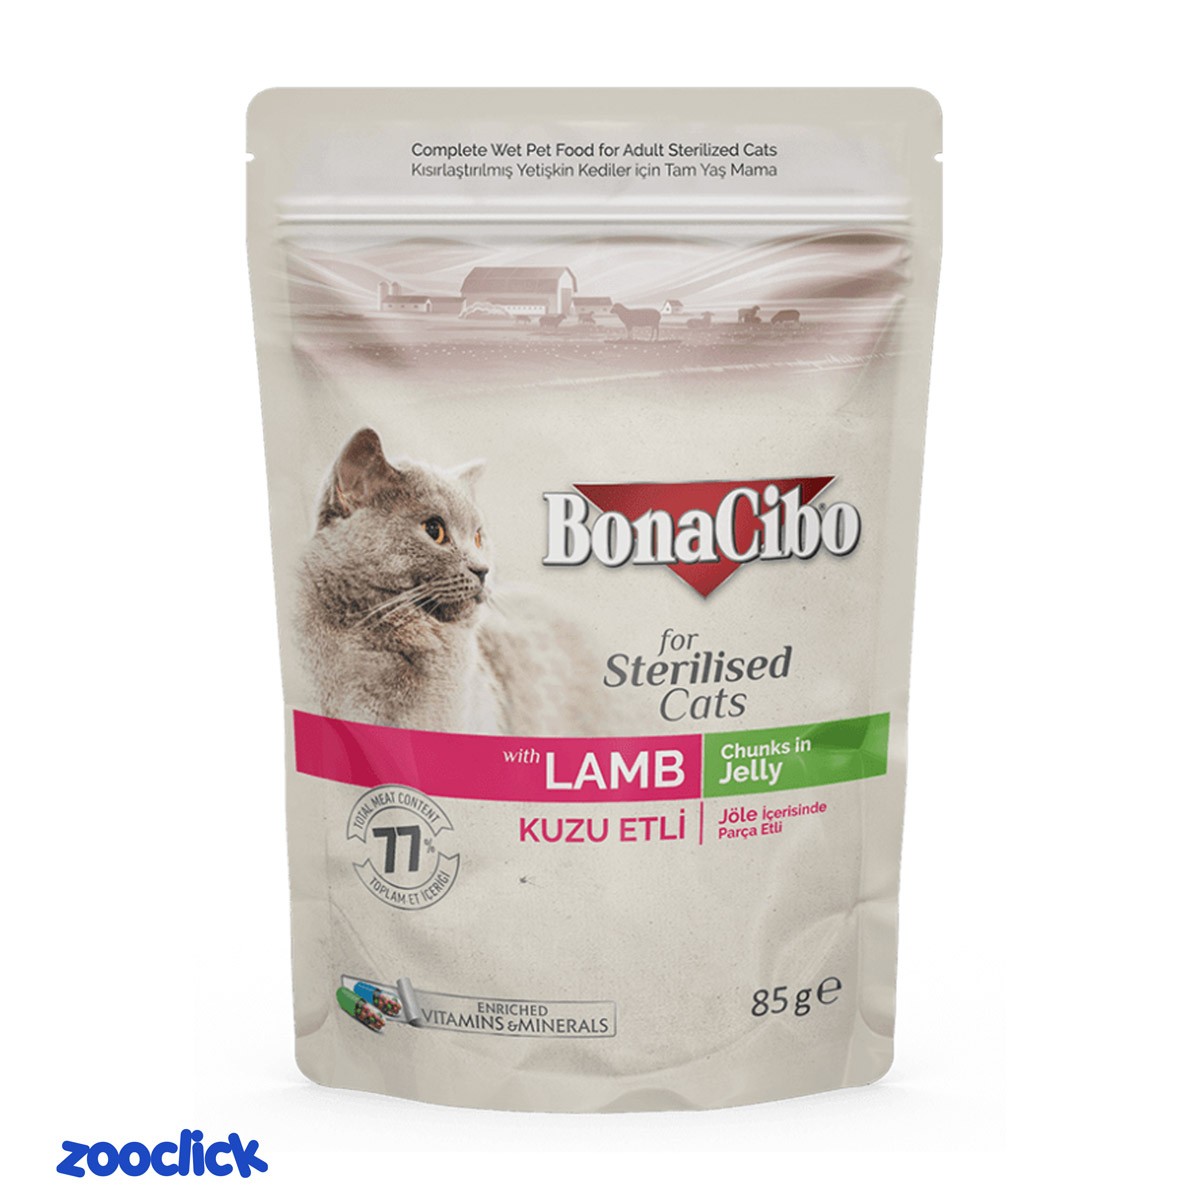 bonacibo adult cat food sterillised with lamb پوچ گربه عقیم شده بوناسیبو با طعم بره